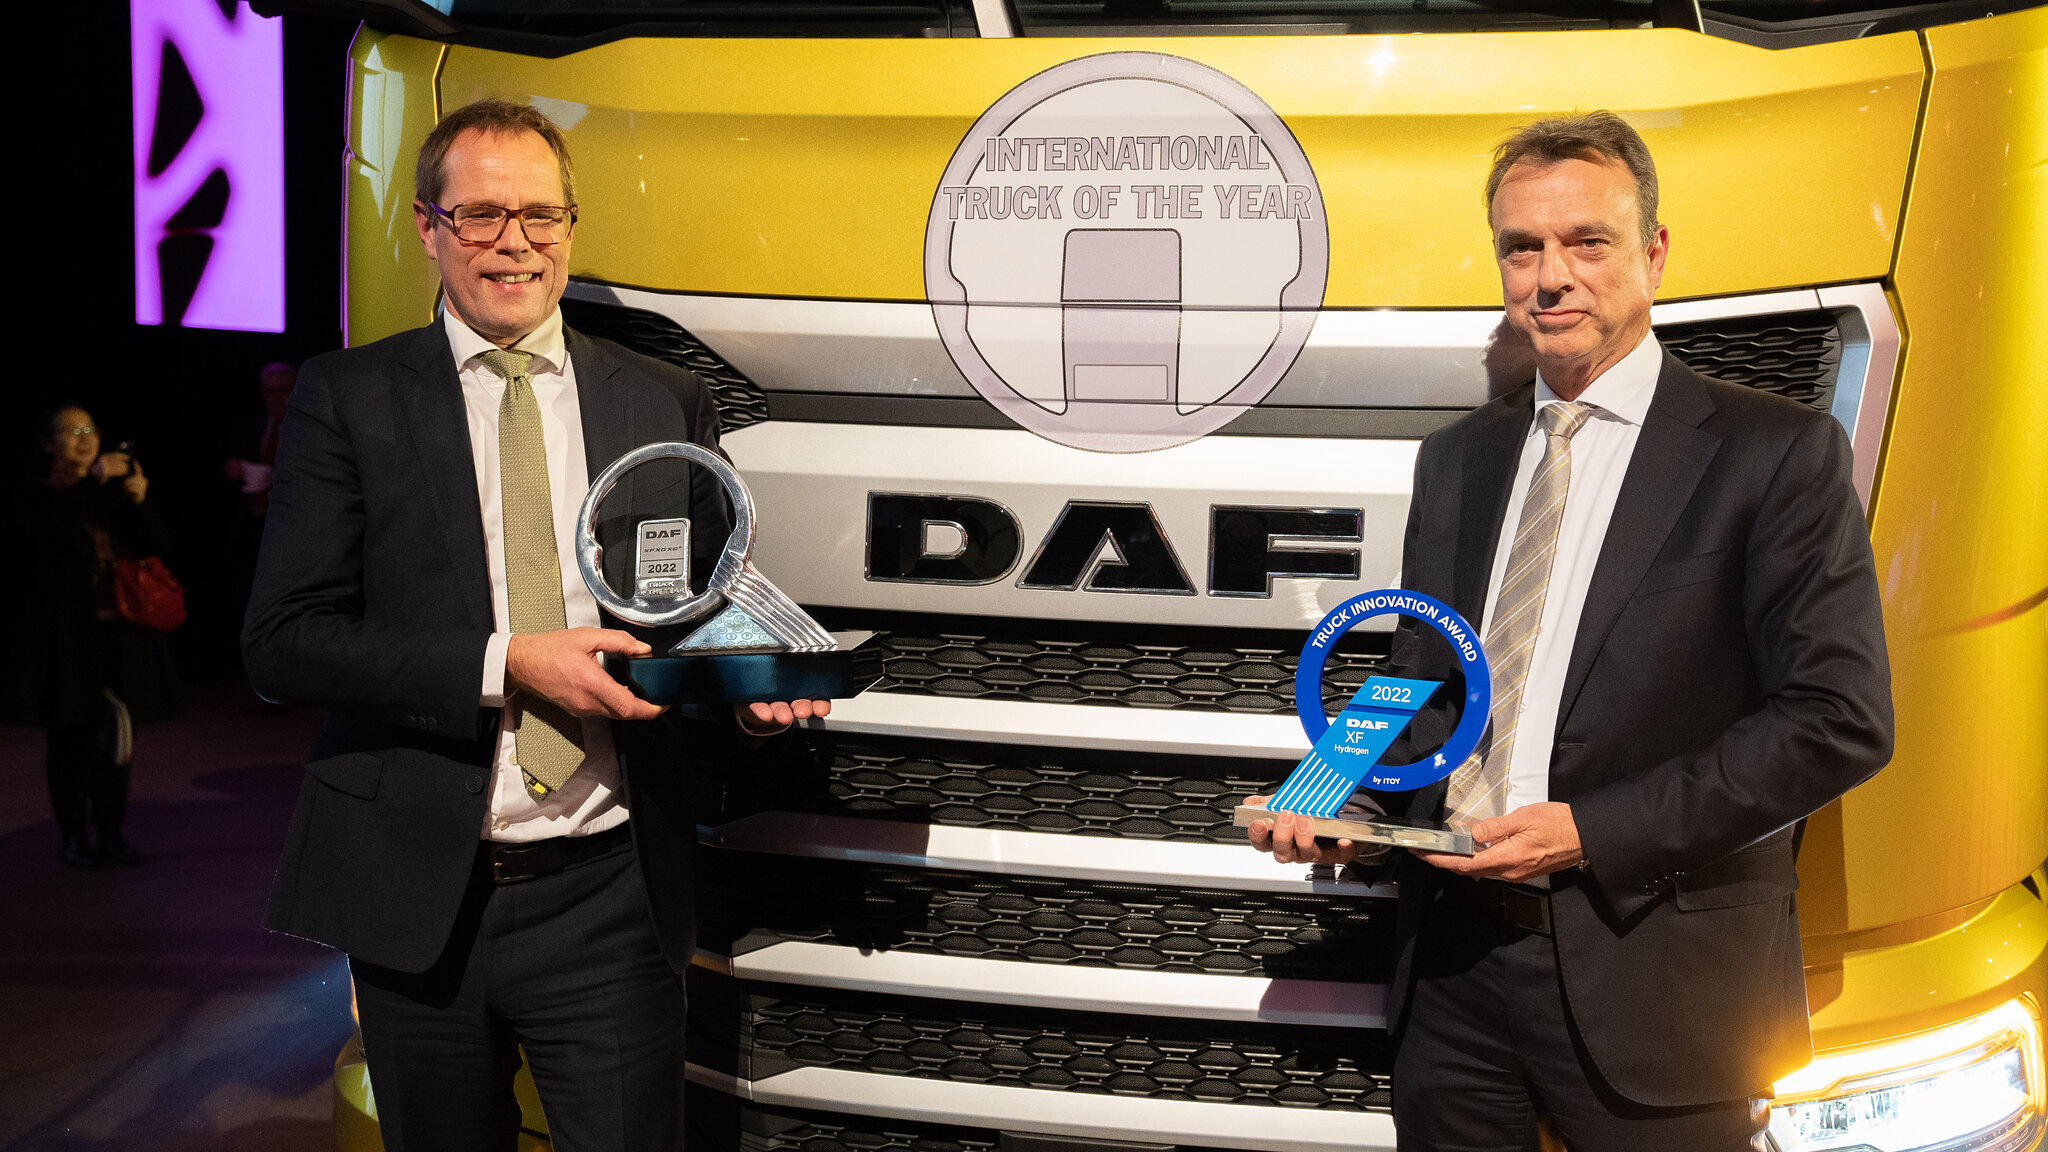 Slideshow Bild - Harry Wolters, President DAF Trucks und Ron Borsboom, Executive Director Product Development  nehmen den International Truck of the Year und den Truck Innovation Award entgegen. 